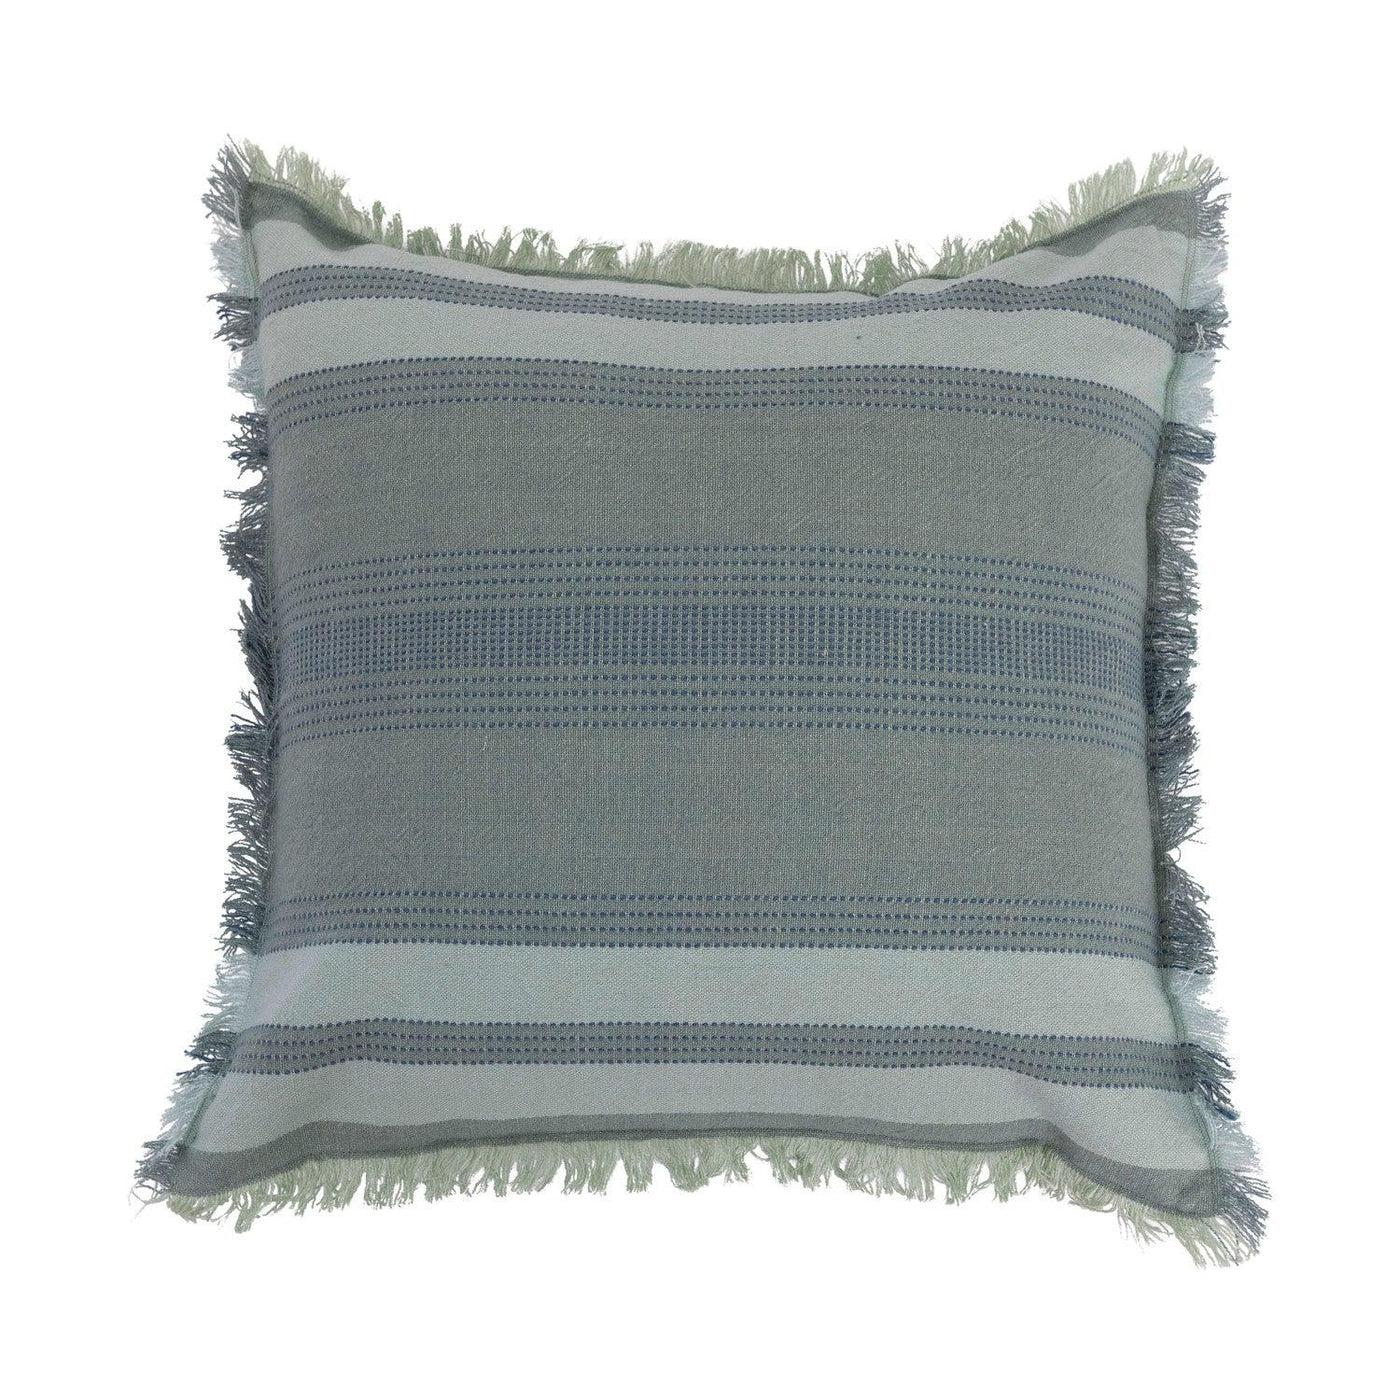 18" Blue & Green Striped Woven Cotton Pillow w/ Eyelash Fringe - Birch and Bind